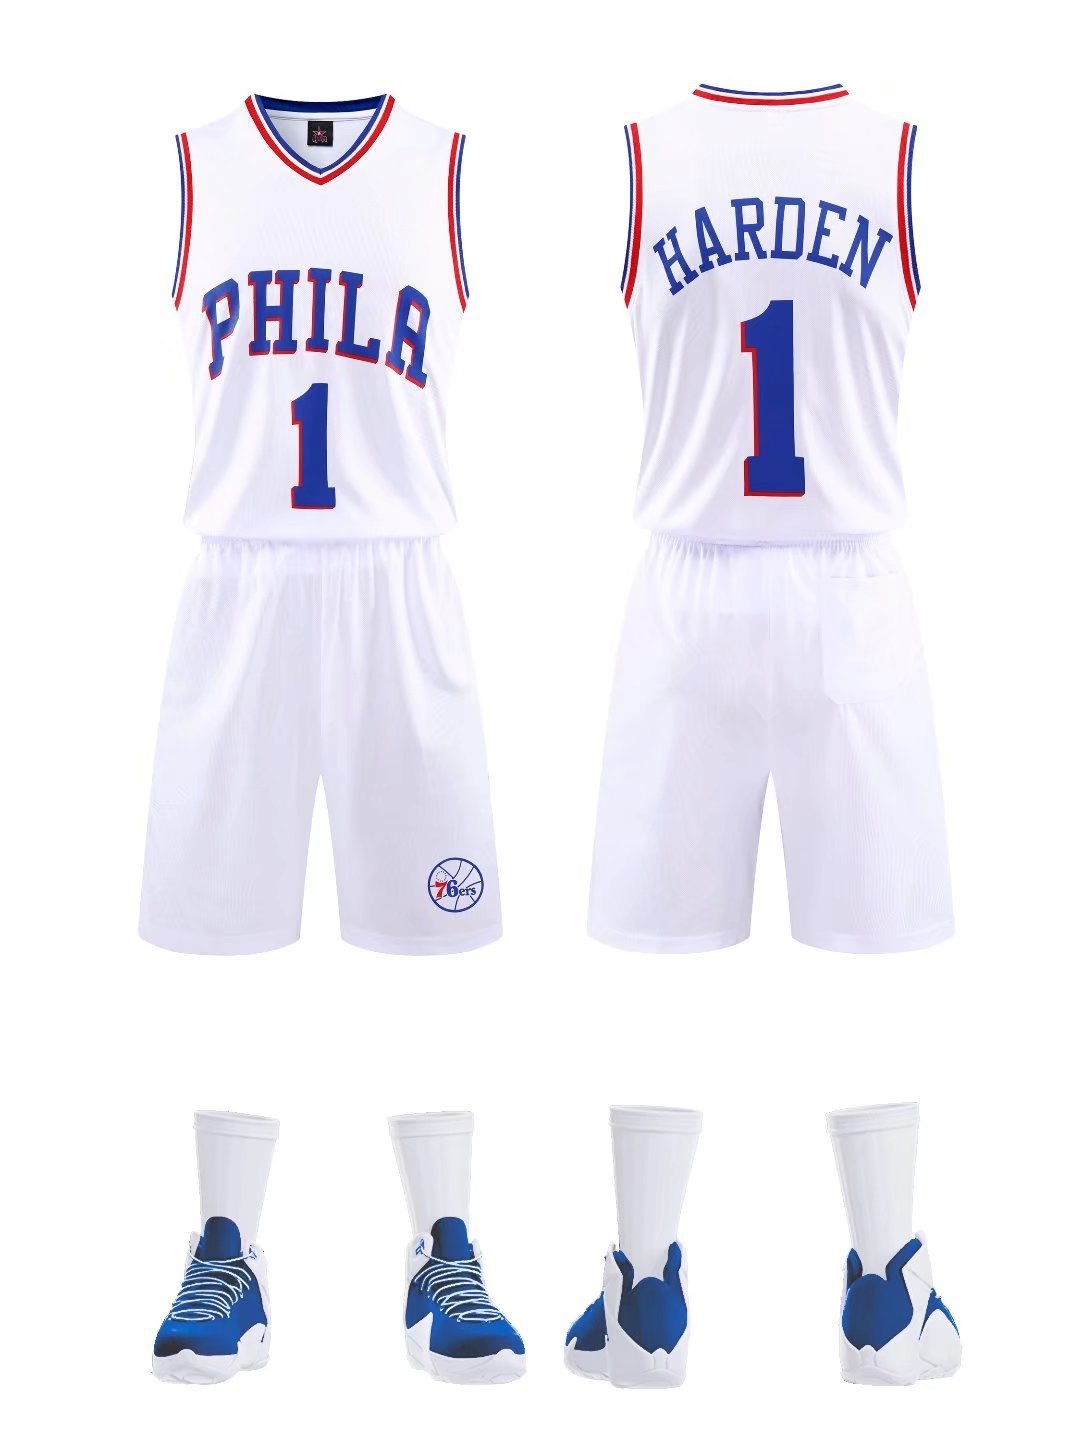 Adult 76ers Basketball Outfit PHI Sport Wear Philadelphia James Harden Fan Apparel Basketball Tops